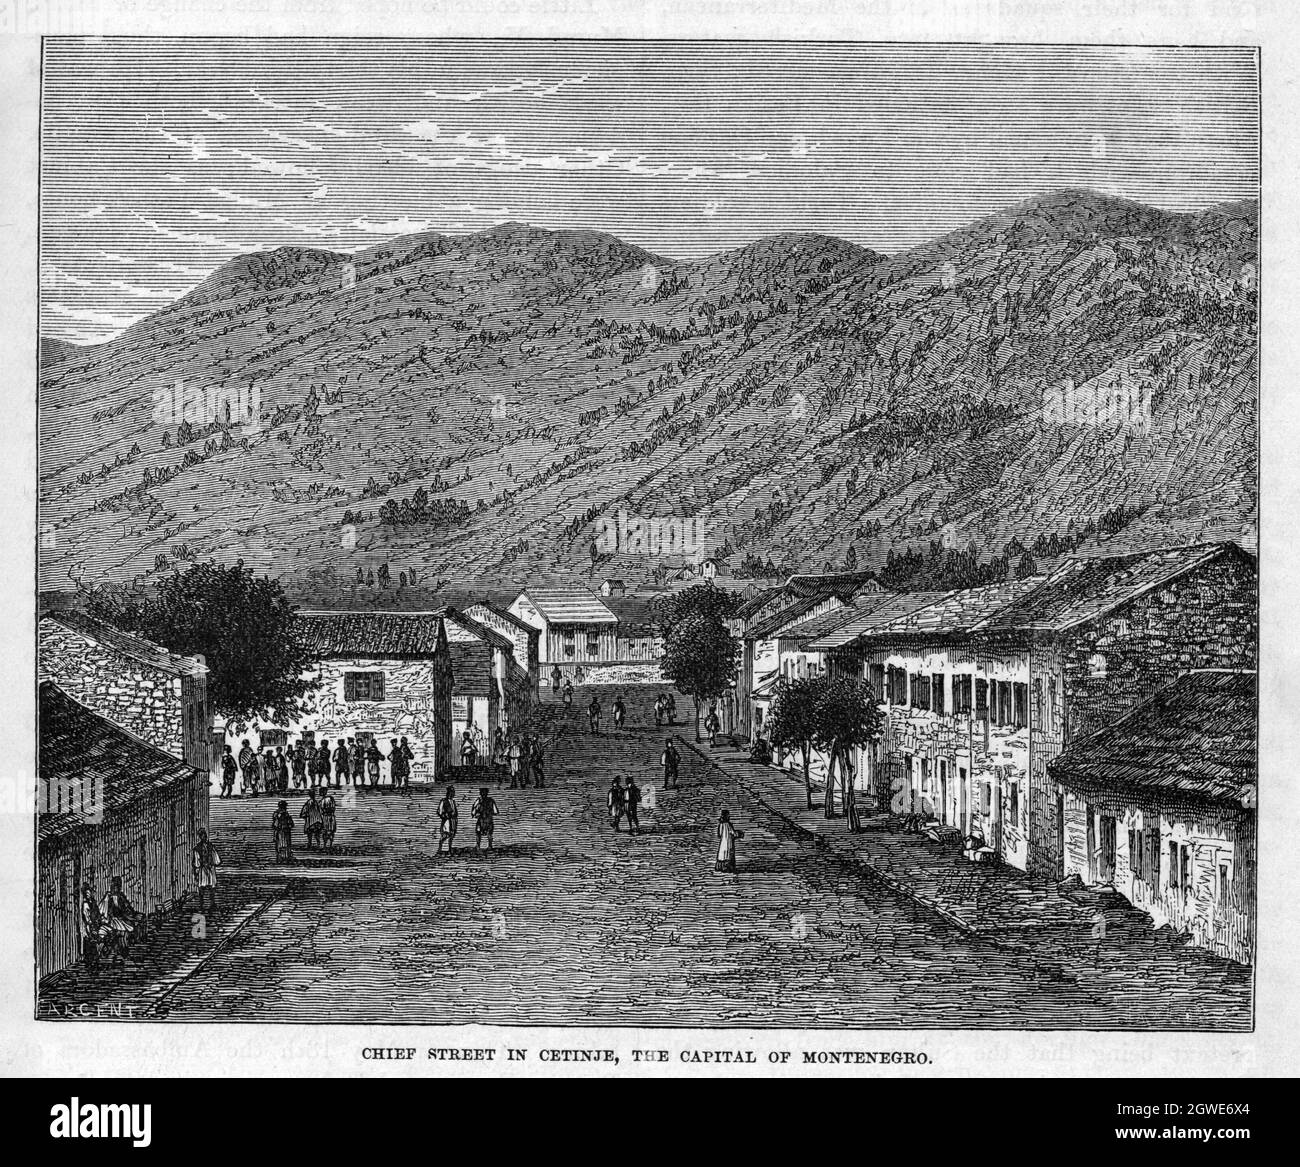 The main street in Cetinje, capital of Montenegro, circa 1876. Stock Photo